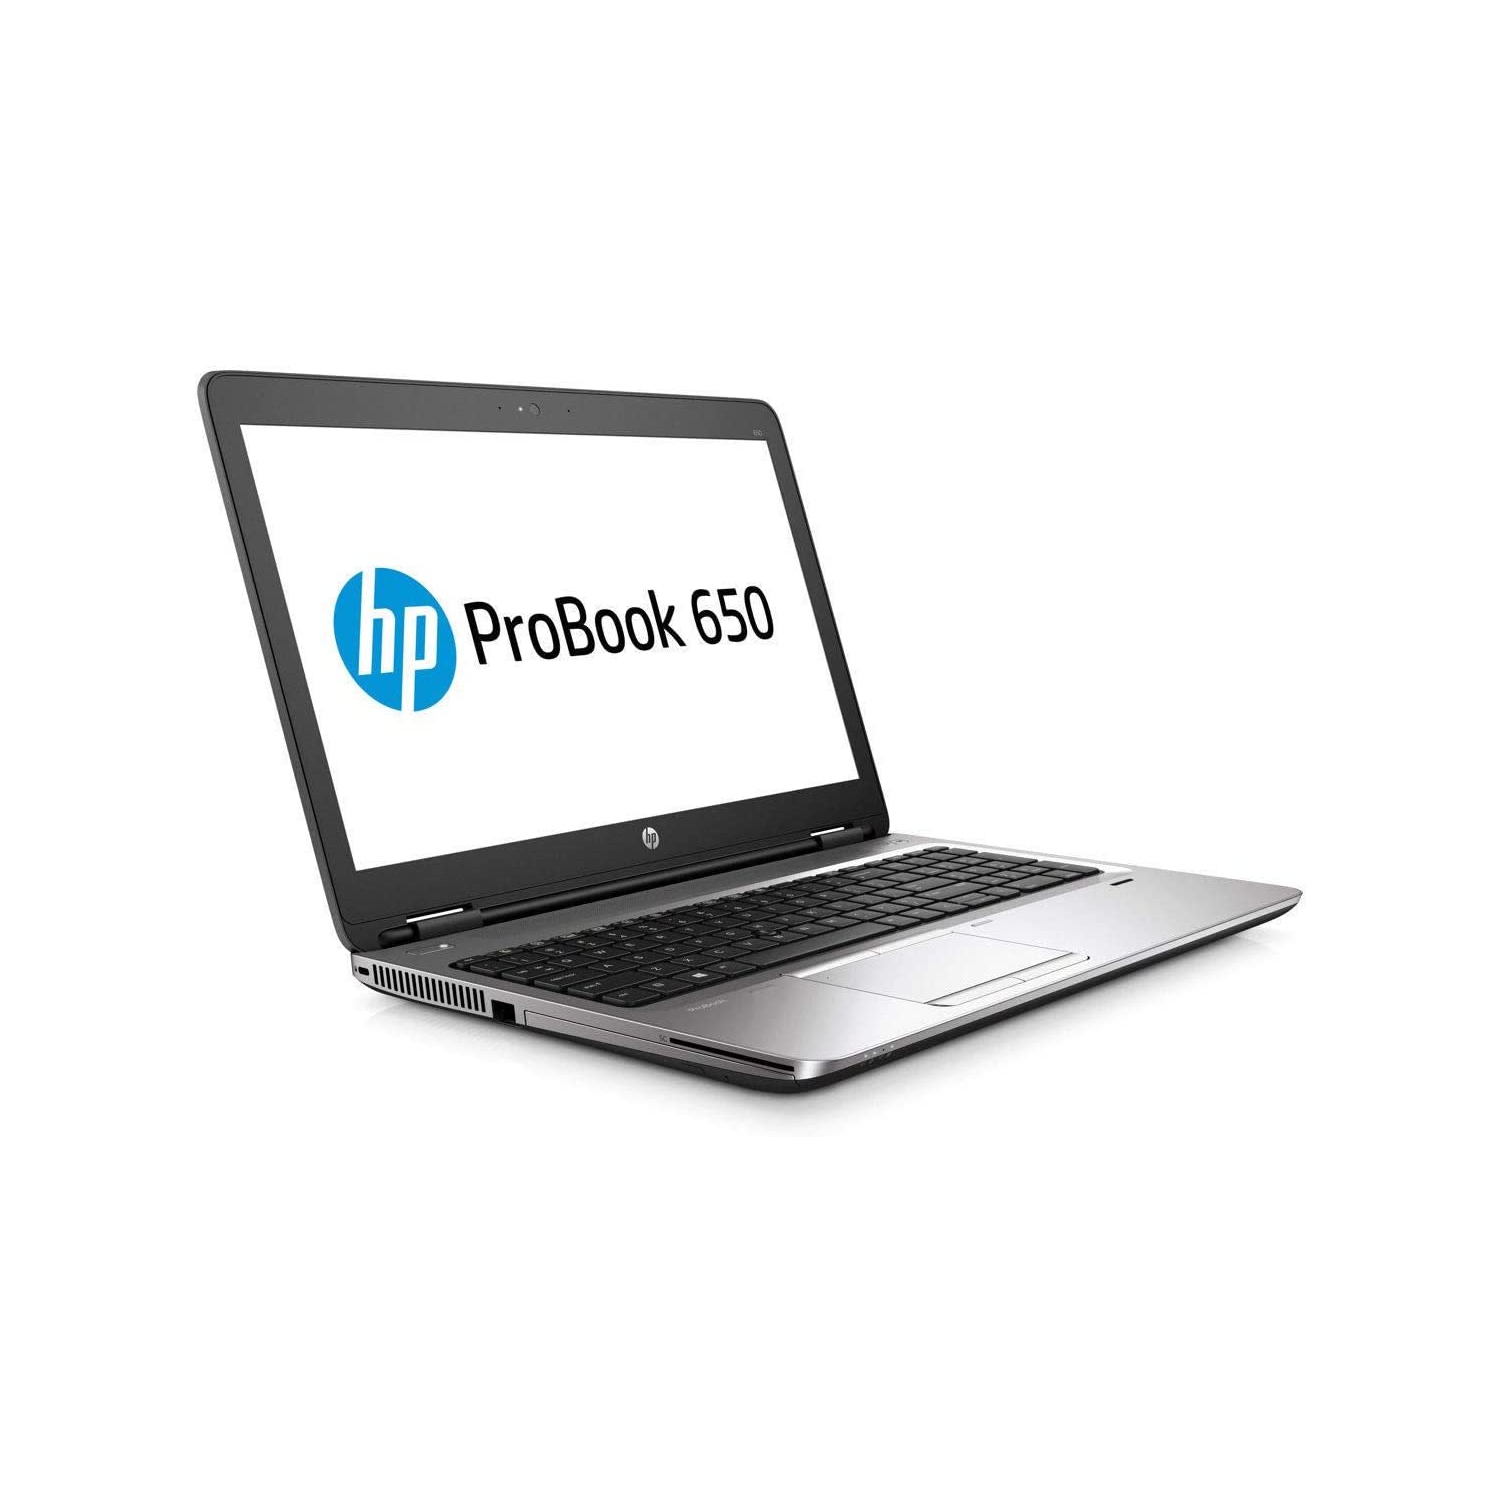 Refurbished (Excellent) - HP ProBook 650 G2 15.6-inch Business Laptop - Intel Core i5 6th Gen, 8GB RAM ,512GB SSD, Webcam, Wins 10 Pro